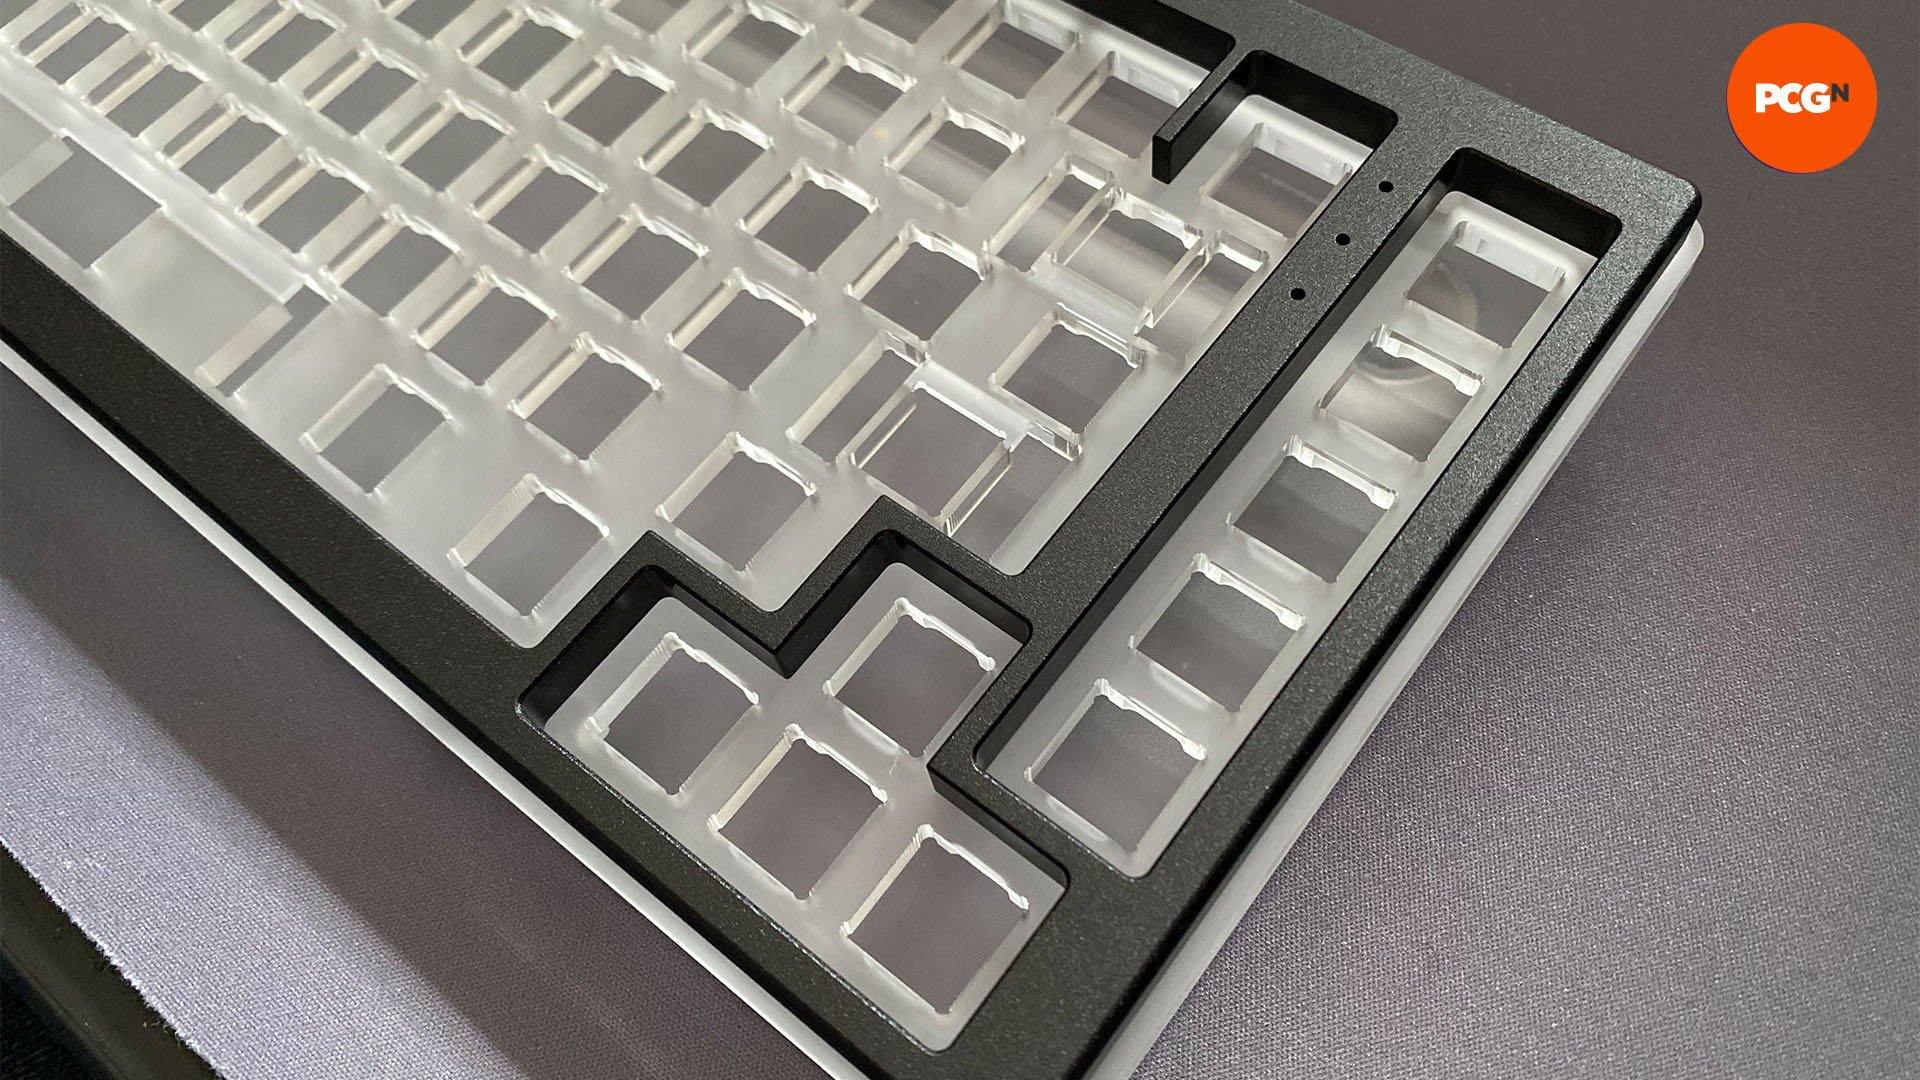 How to make a custom keyboard: Switch plate case